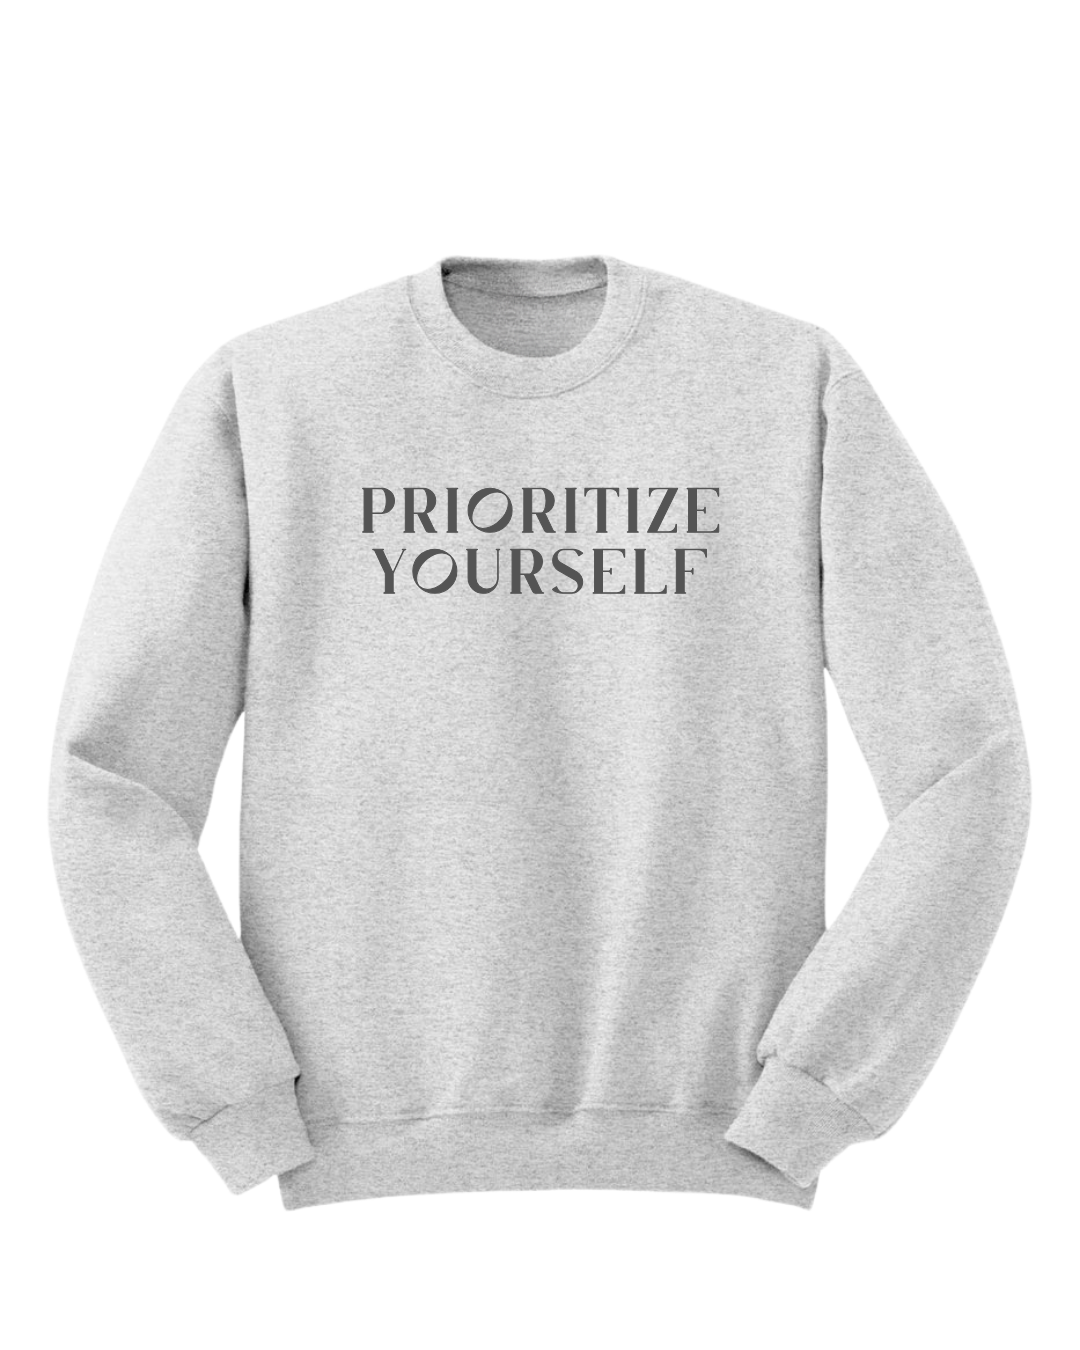 Prioritize Yourself Sweatshirt